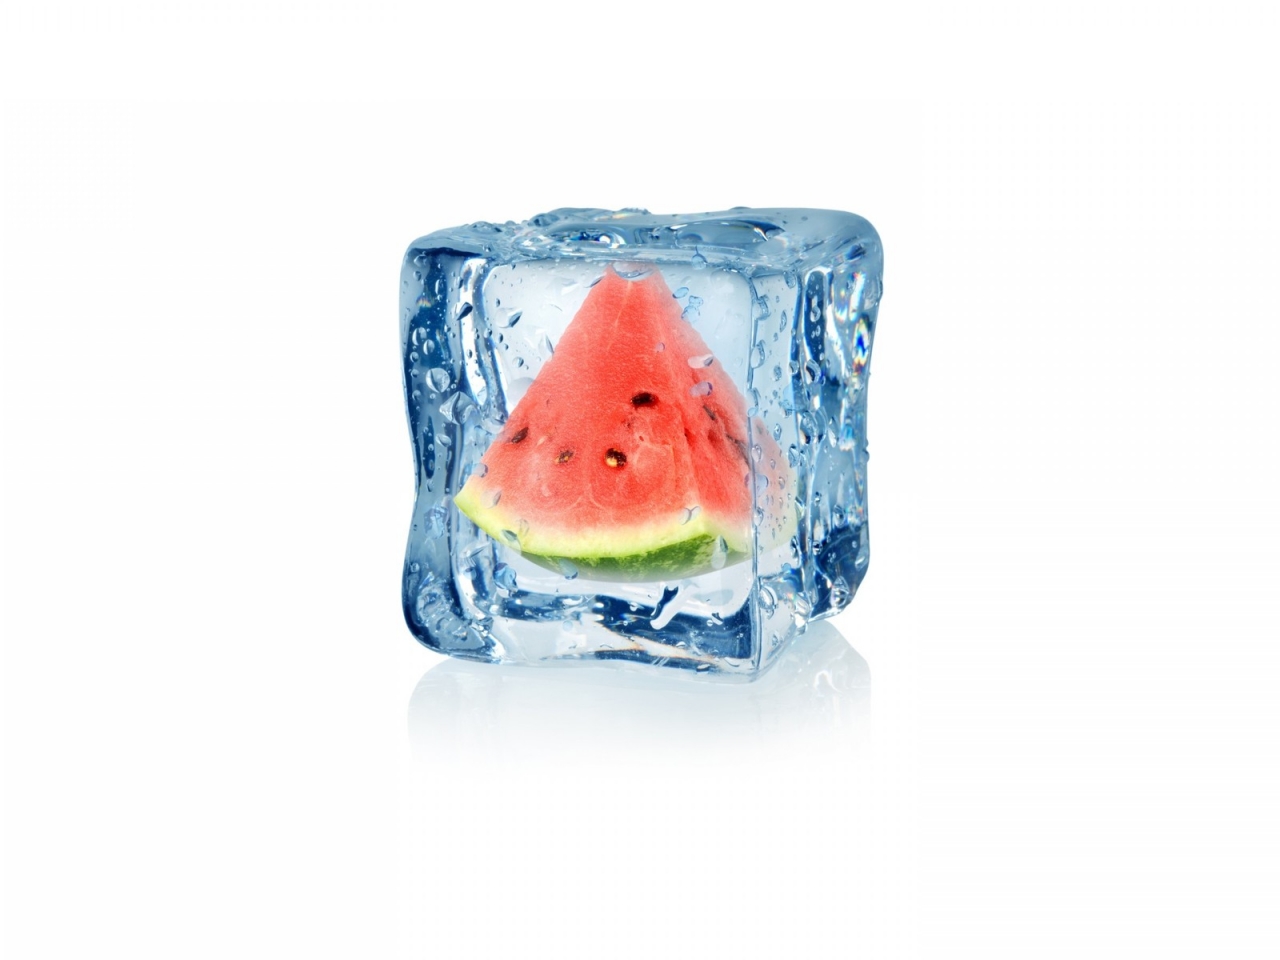 Frozen Watermelon  for 1280 x 960 resolution